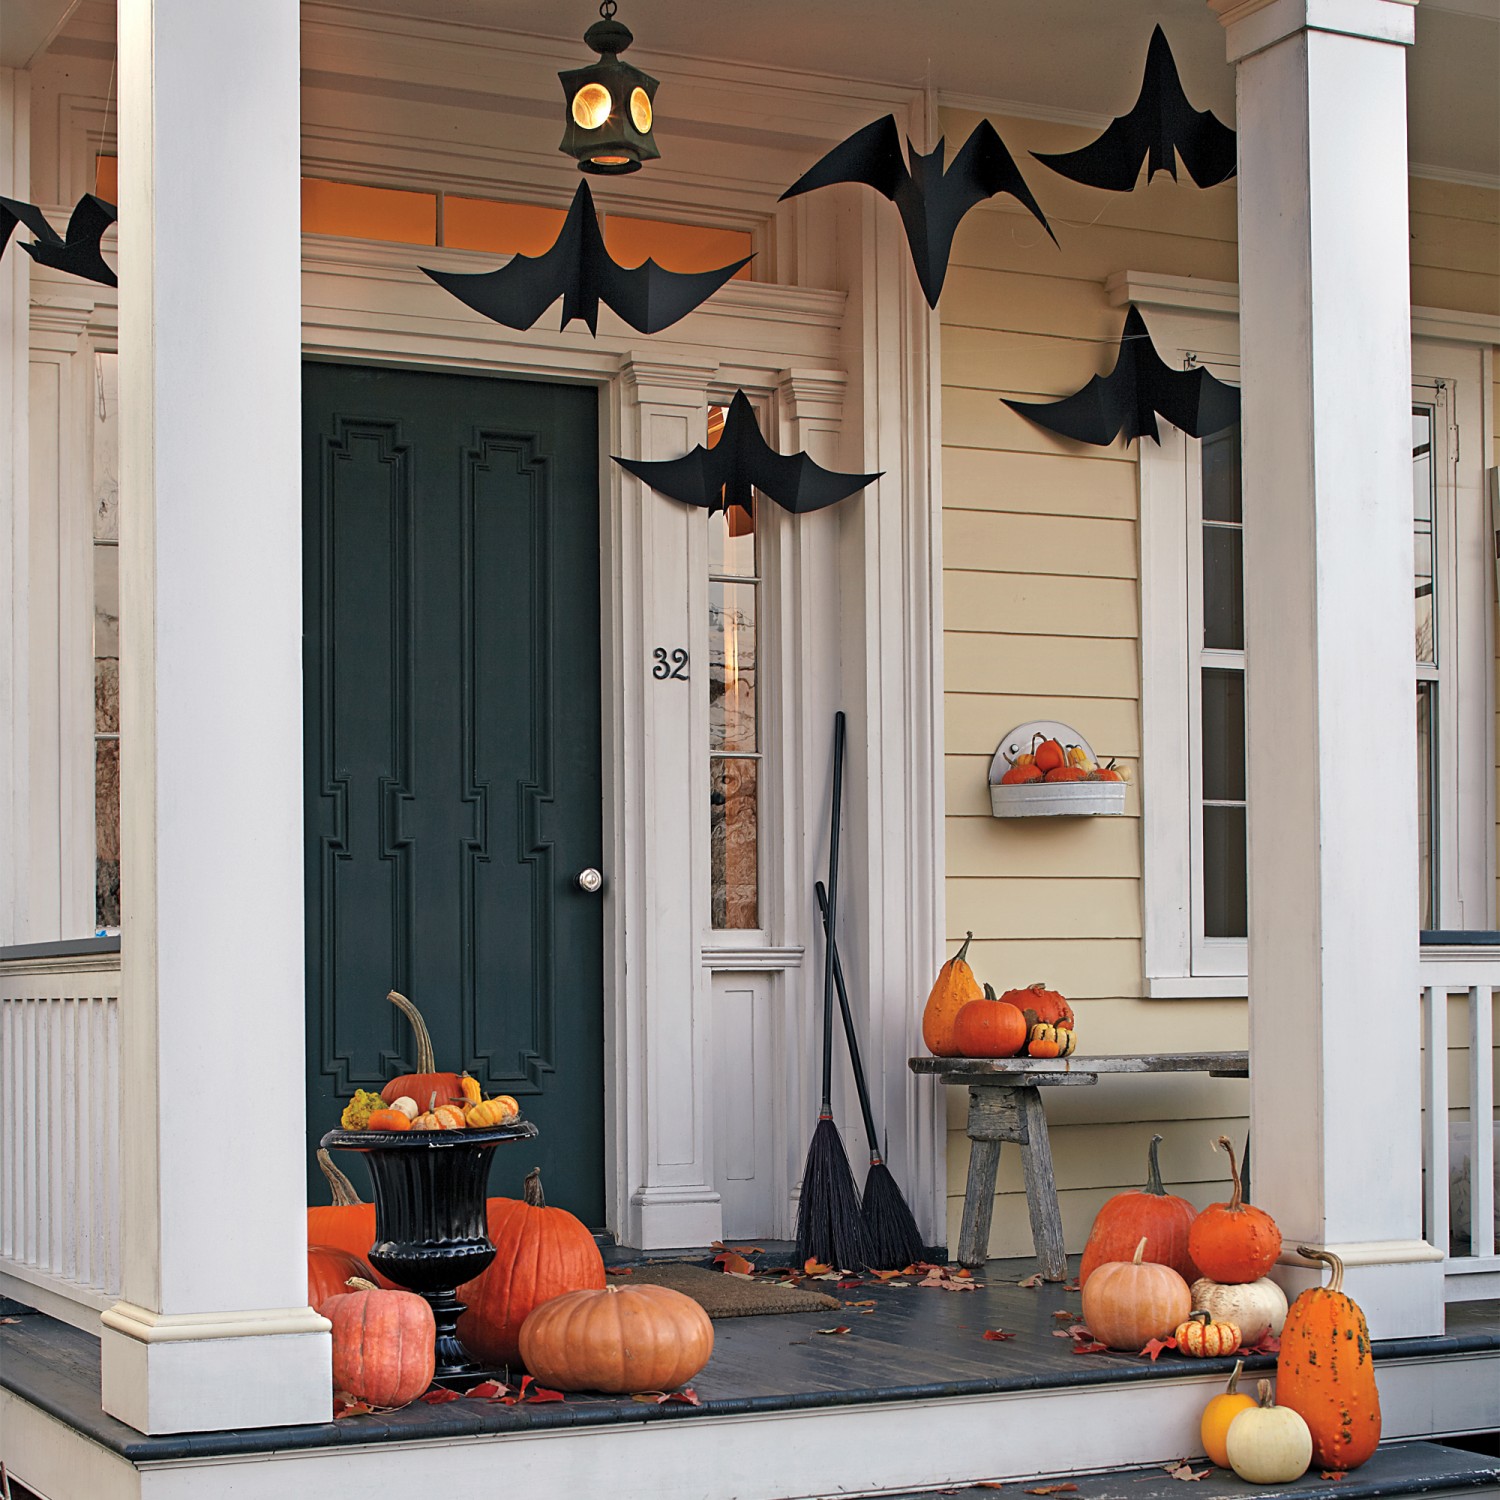 Classy Porch Halloween Decorations